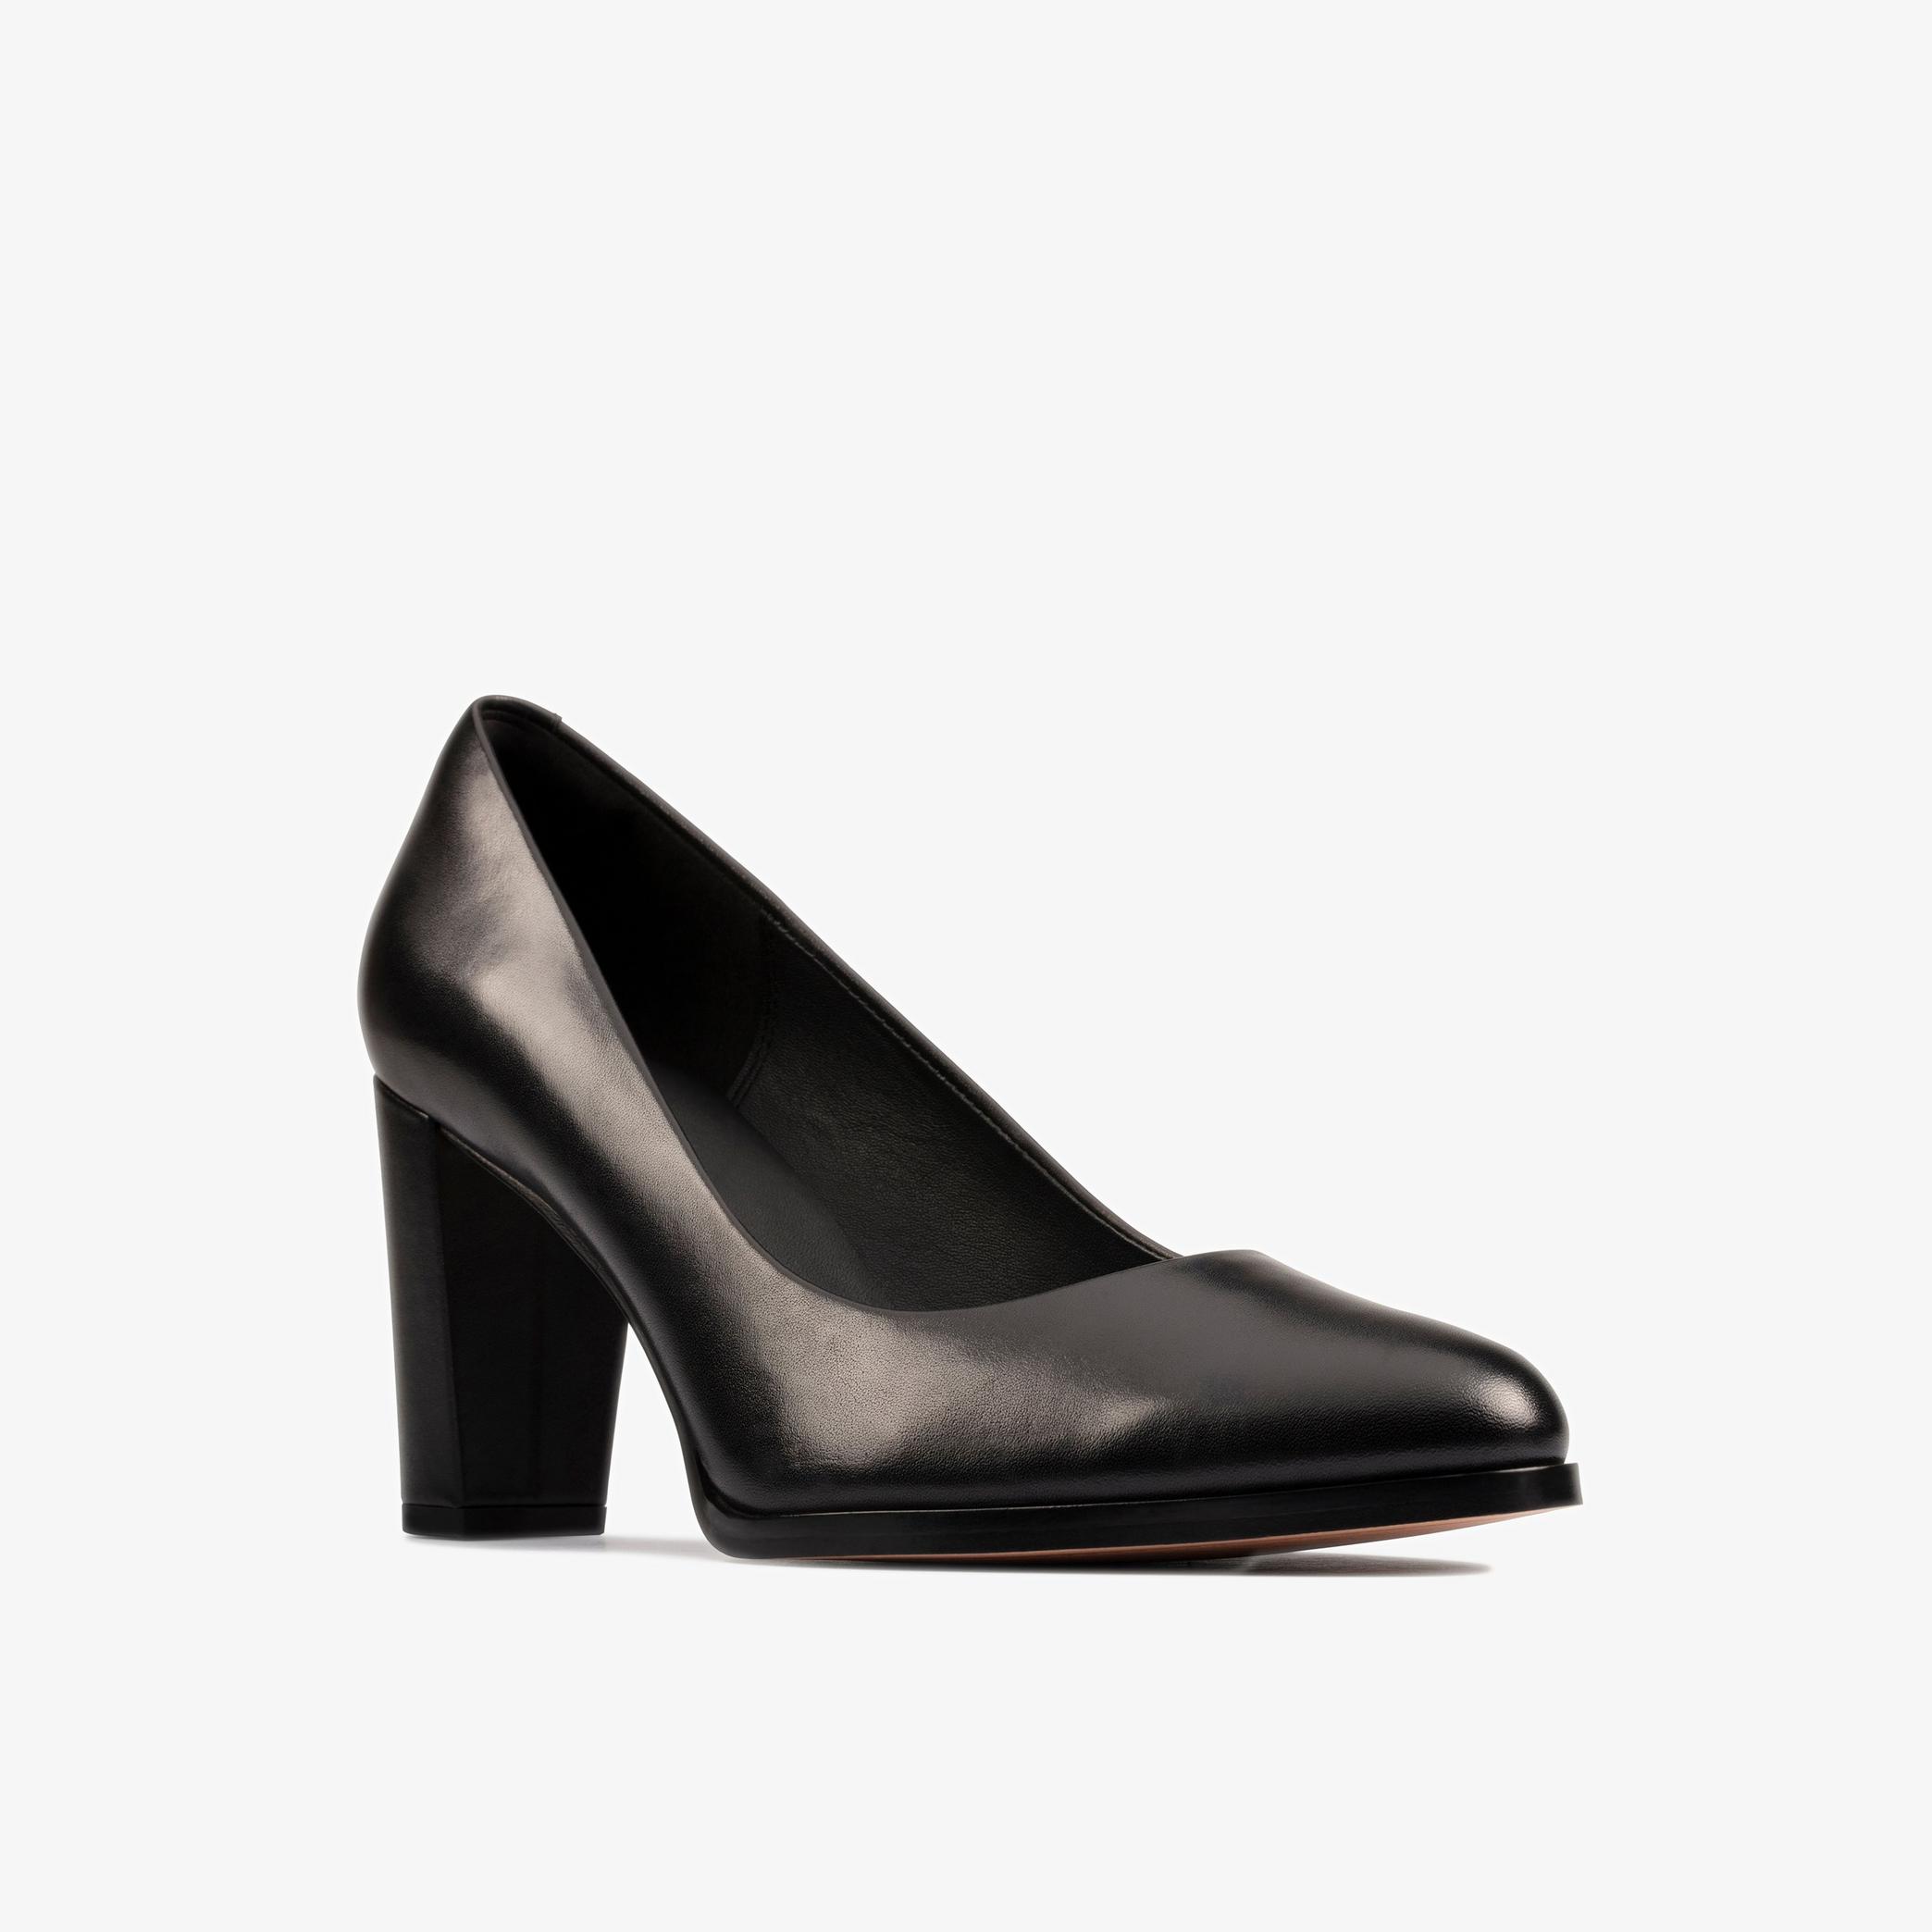 Kaylin Cara 2 Black Leather High Heels, view 3 of 6